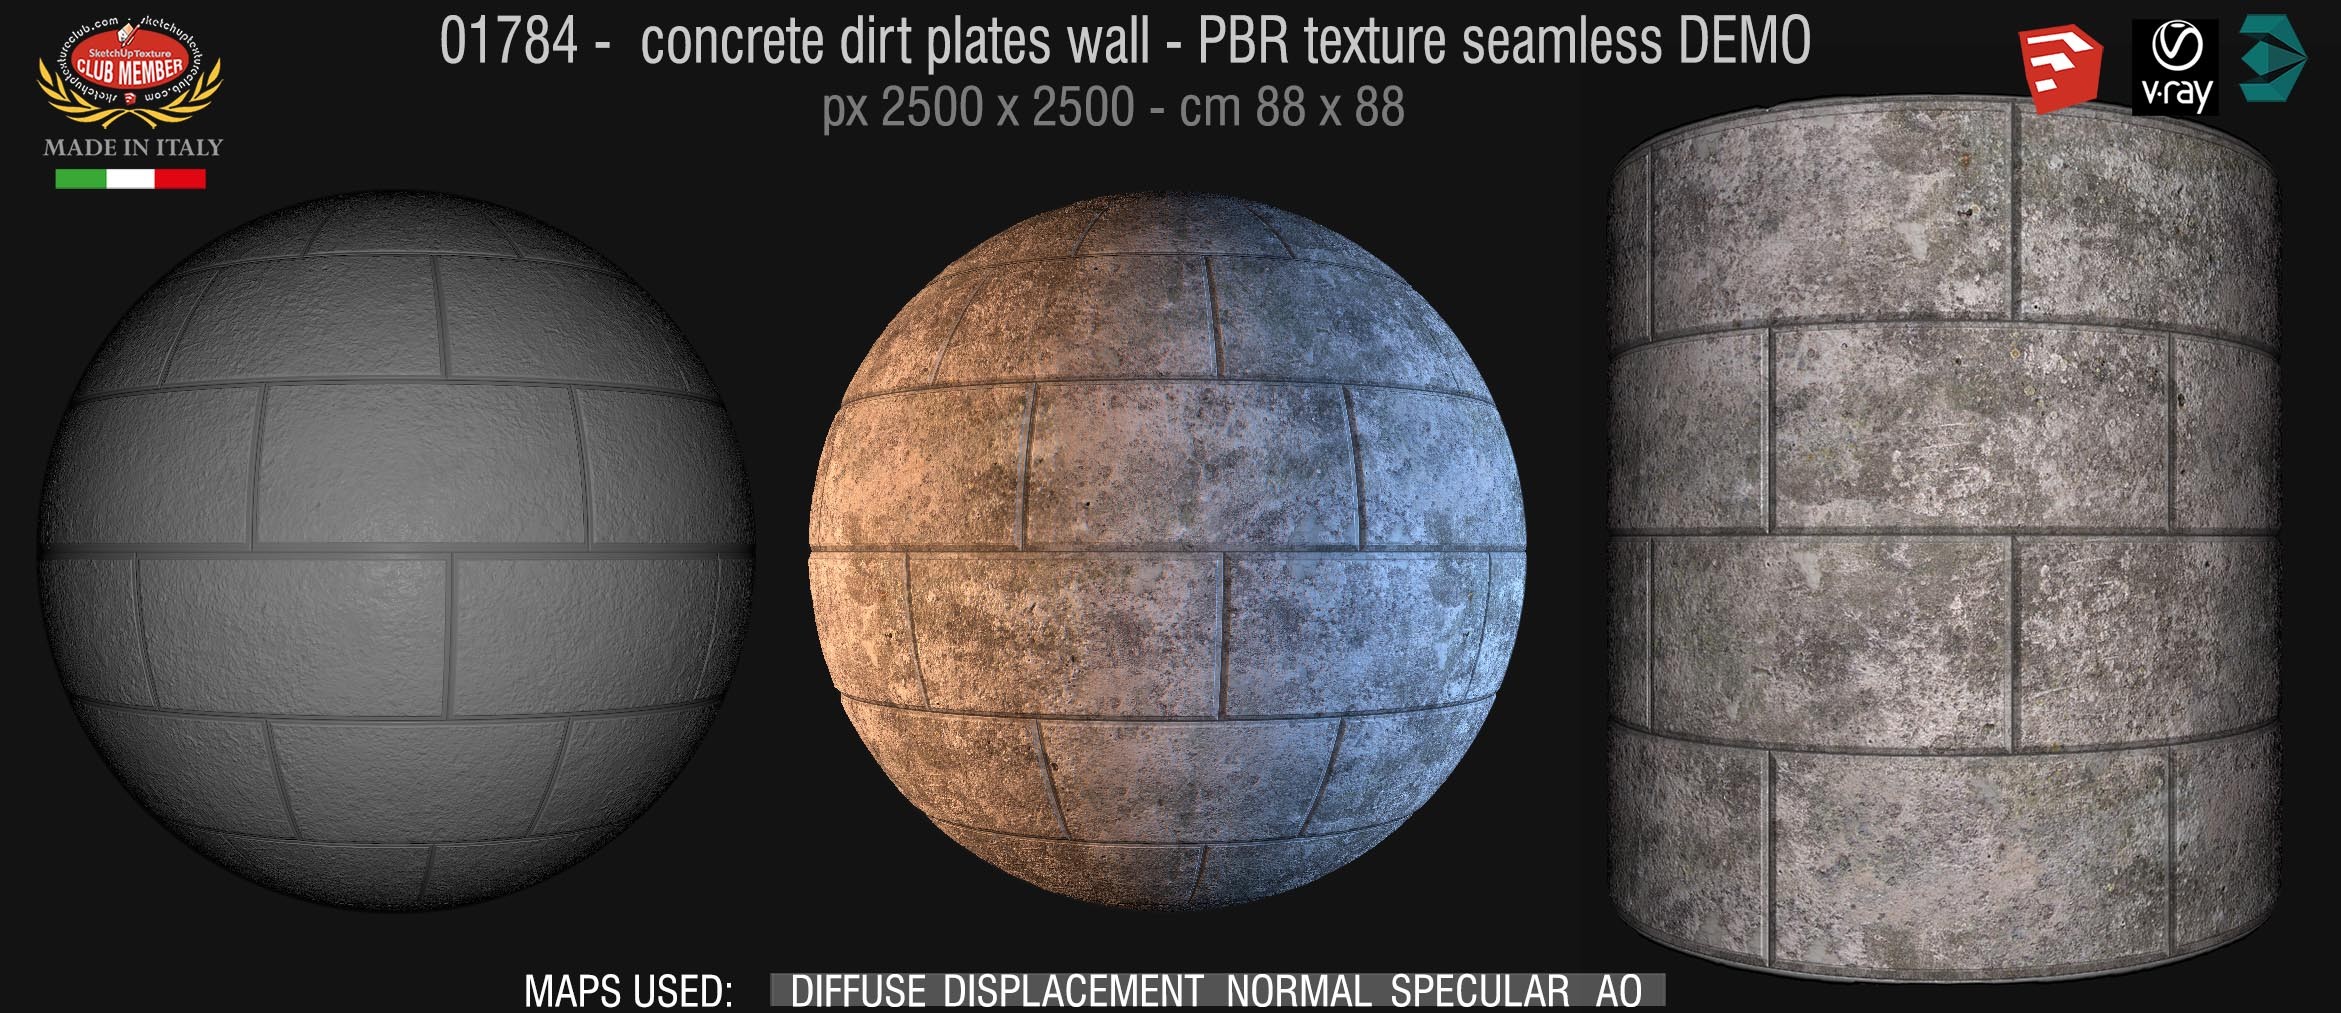 01784 concrete dirt plates wall PBR texture seamless DEMO